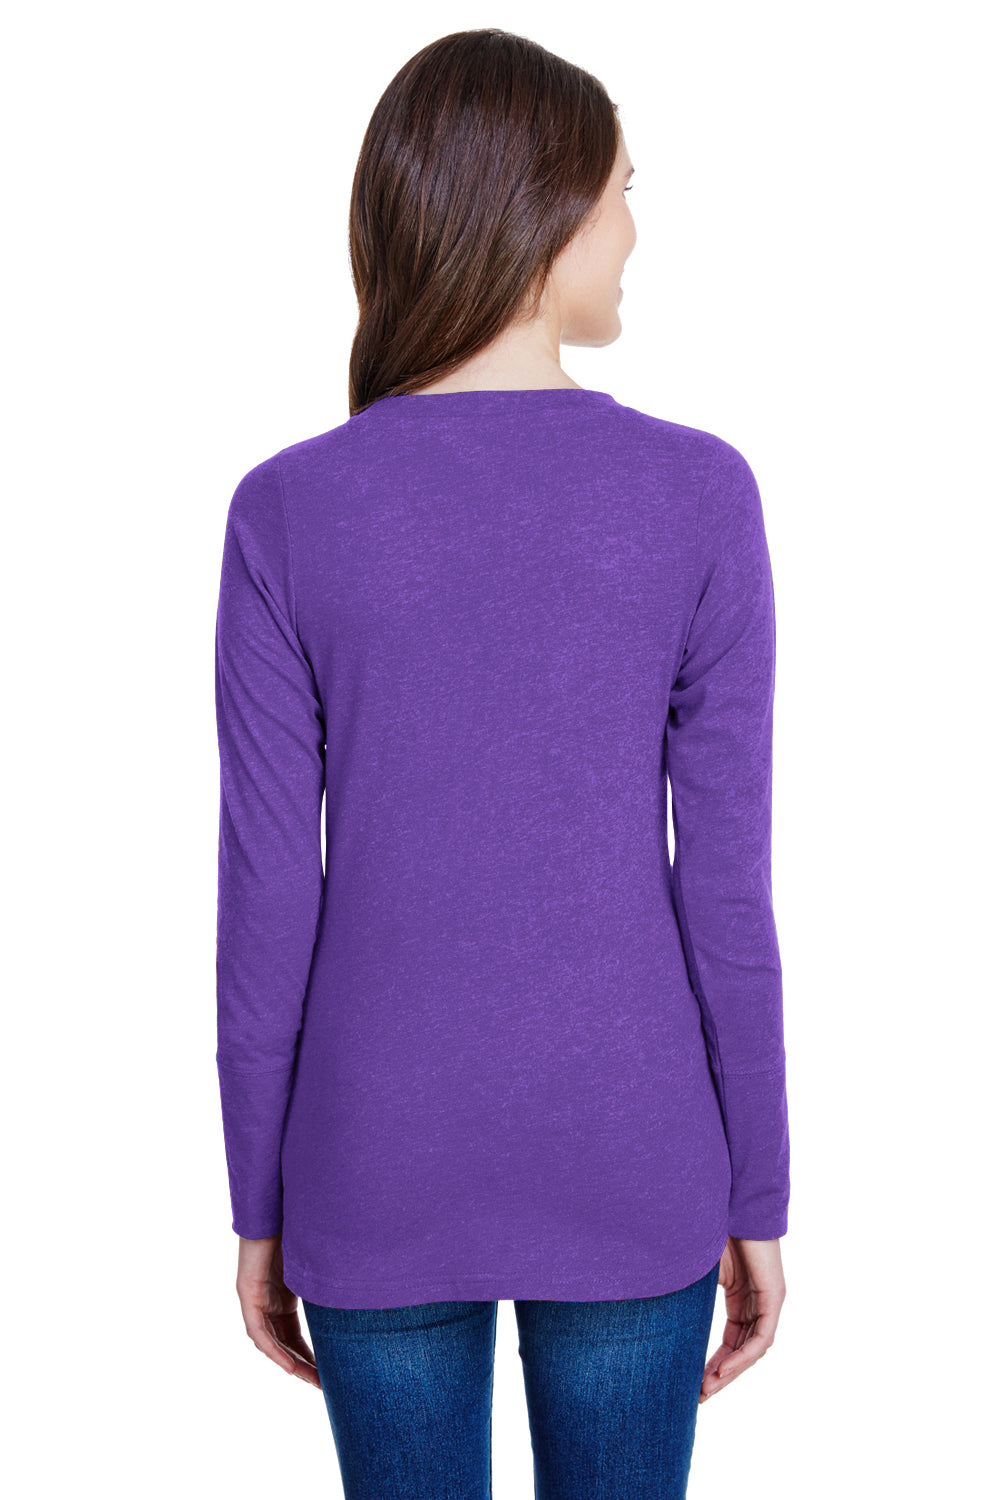 LAT LA3538 Womens Fine Jersey Lace Up Long Sleeve V-Neck T-Shirt Purple Back